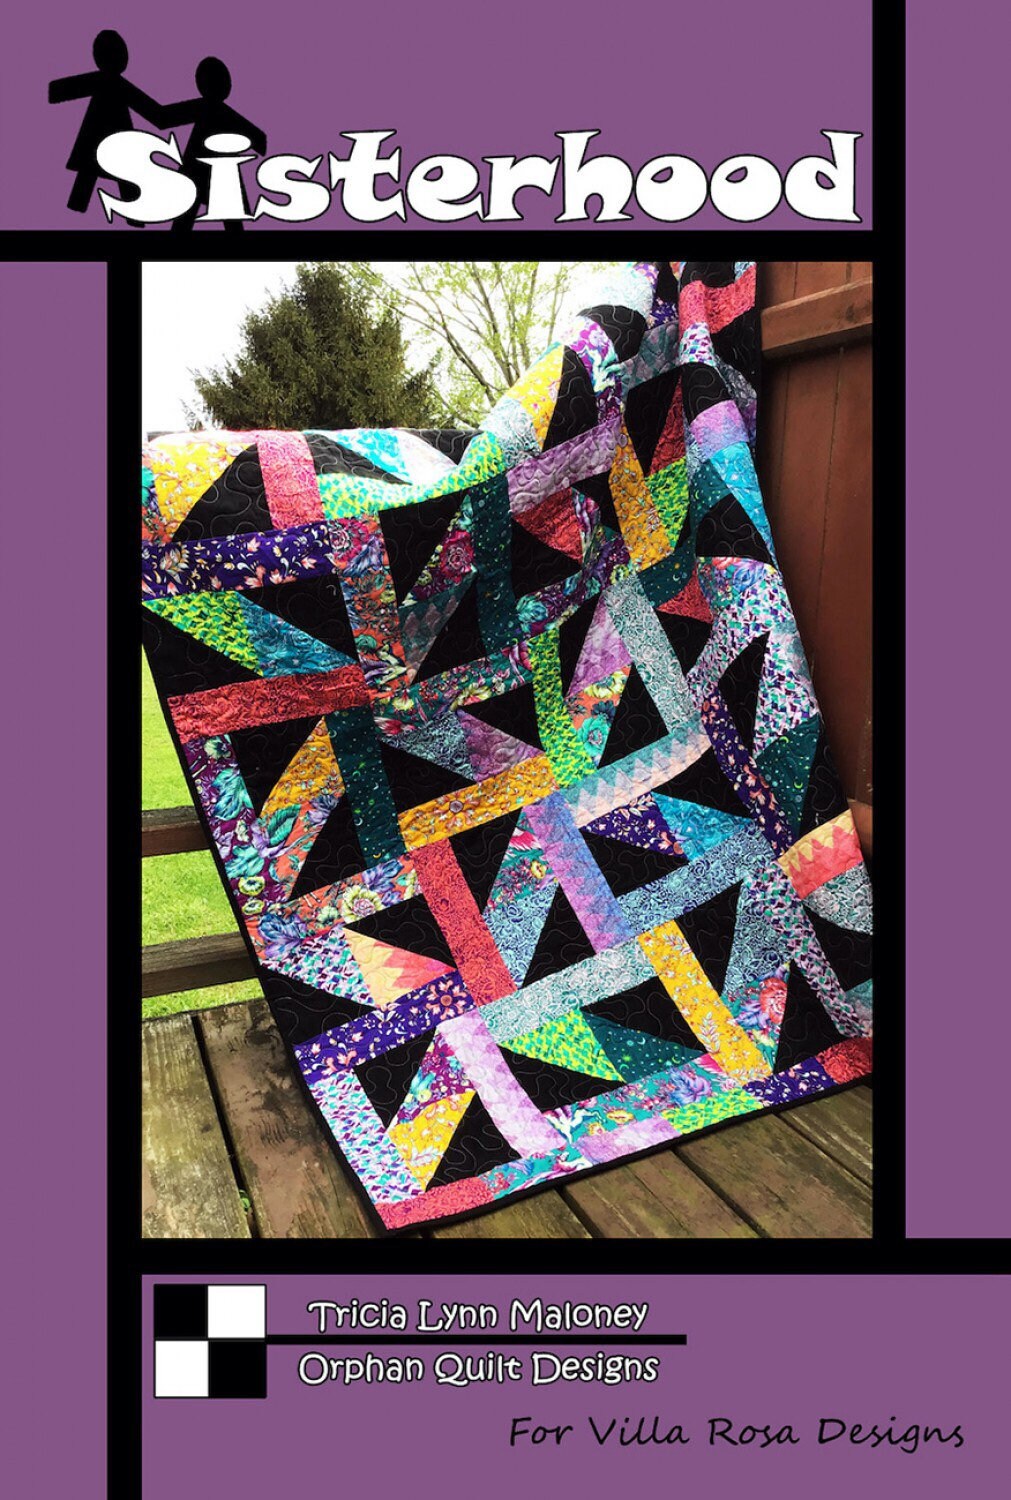 Sisterhood Quilt Pattern - 50” x 64” - Villa Rose Designs - Tricia Lynn Maloney - Orphan Quilt Designs - Fat Quarter Friendly